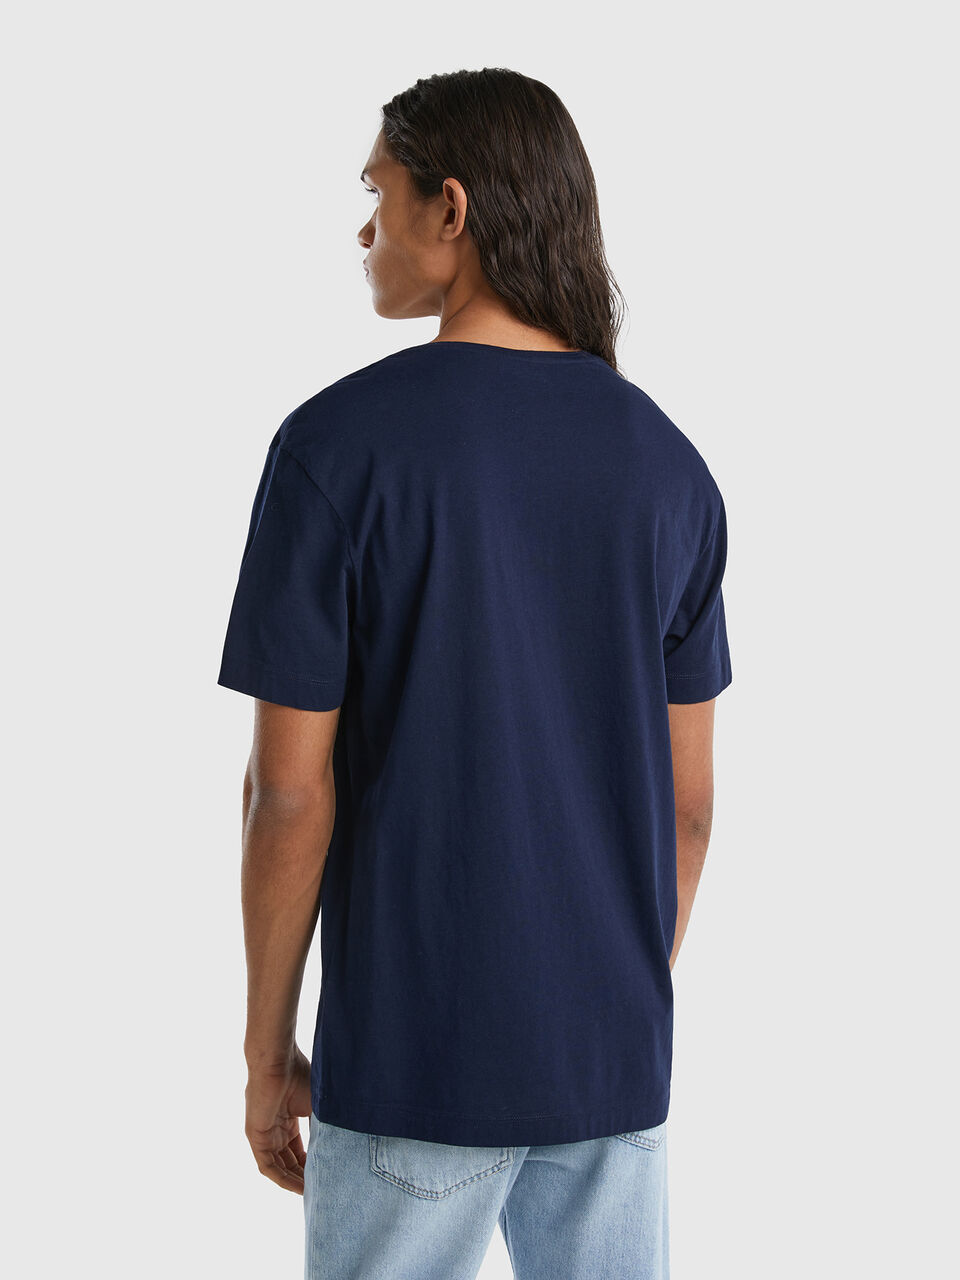 Tee-shirt en coton imprimé pour homme bleu foncé Bolf 14728A BLEU MARINE